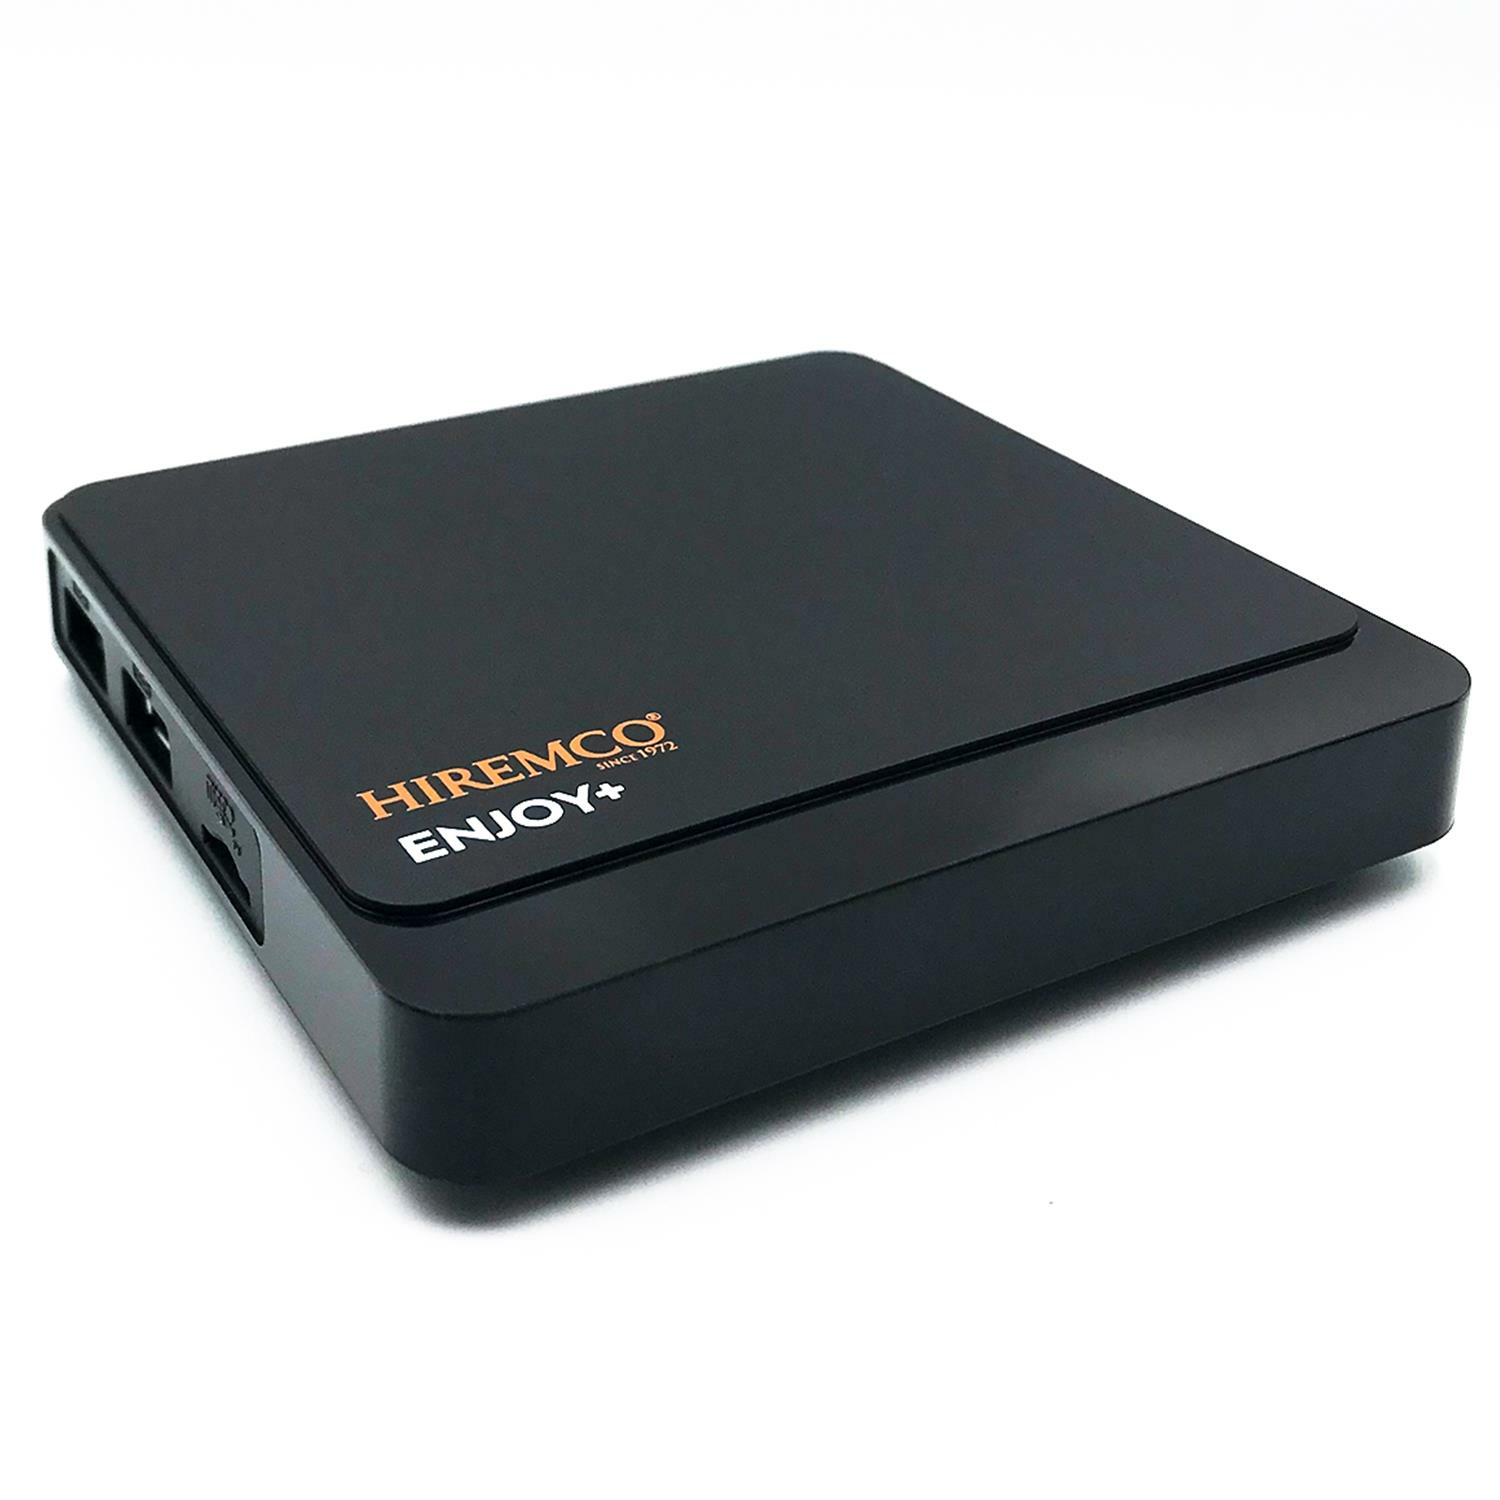 Hiremco Enjoy+ Android Tv Box